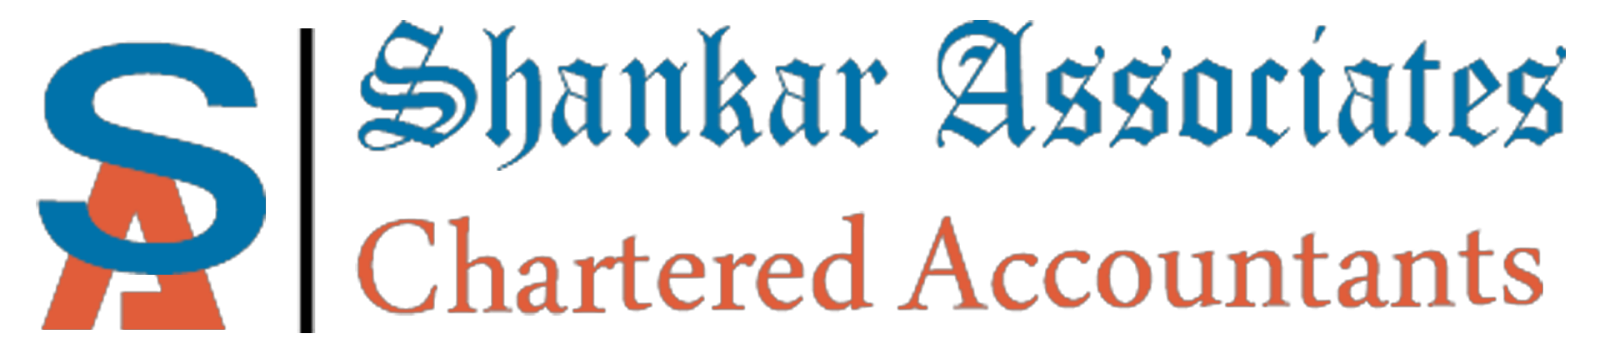 Shankar Associates, Chartered Accountants